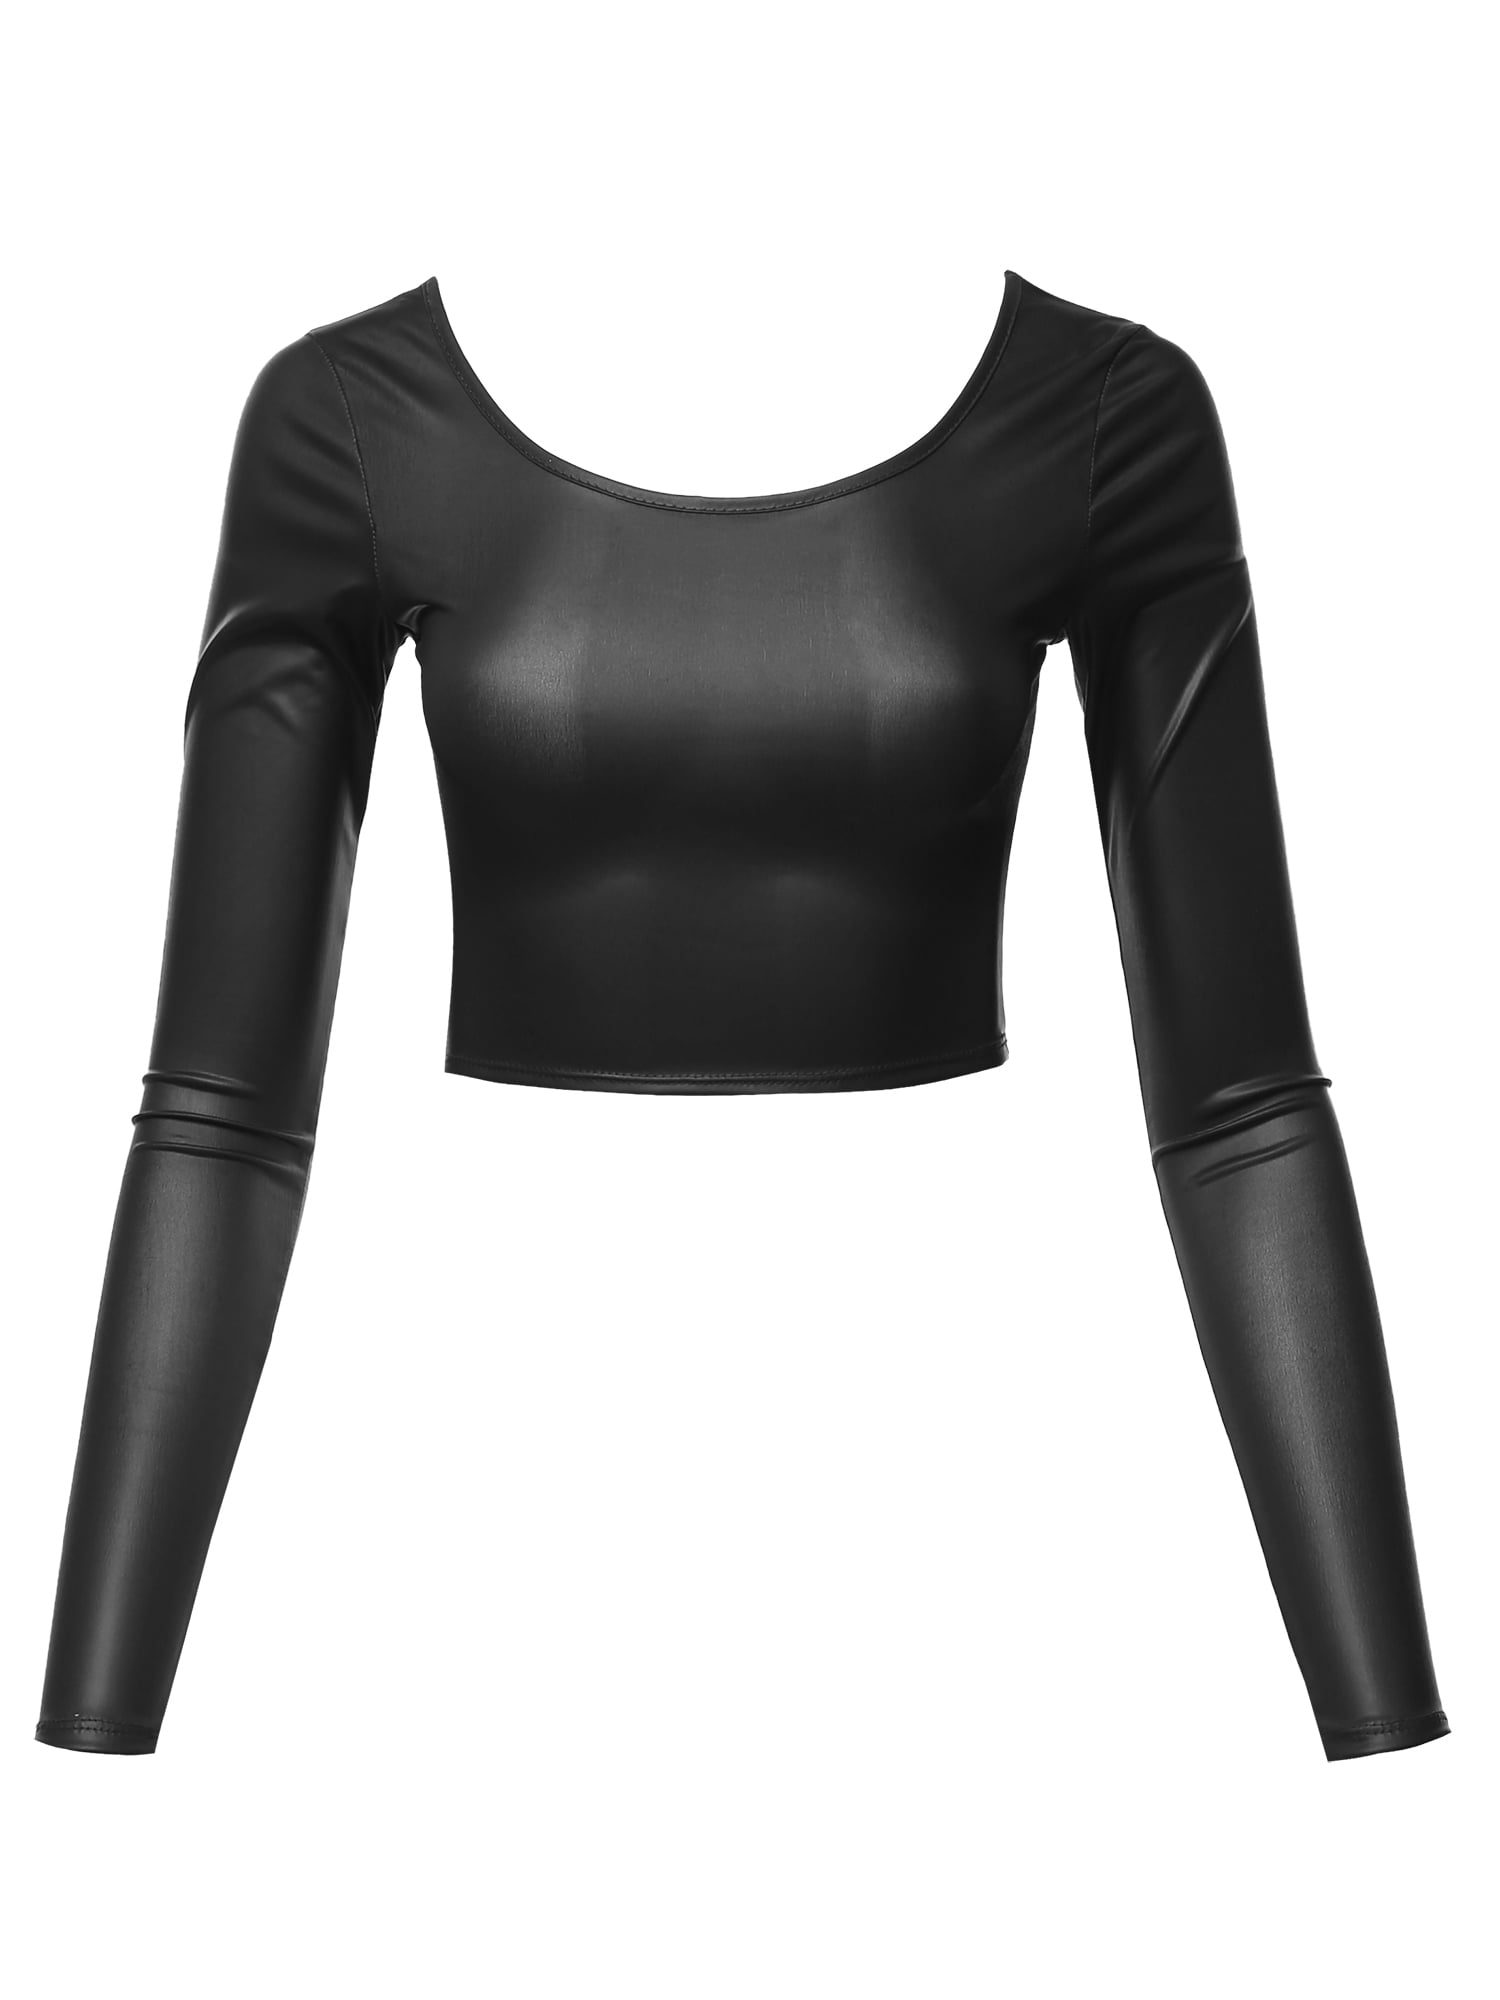 A2Y Women's Faux Leather Double Scoop Neck Long Sleeve Crop Top Black M ...